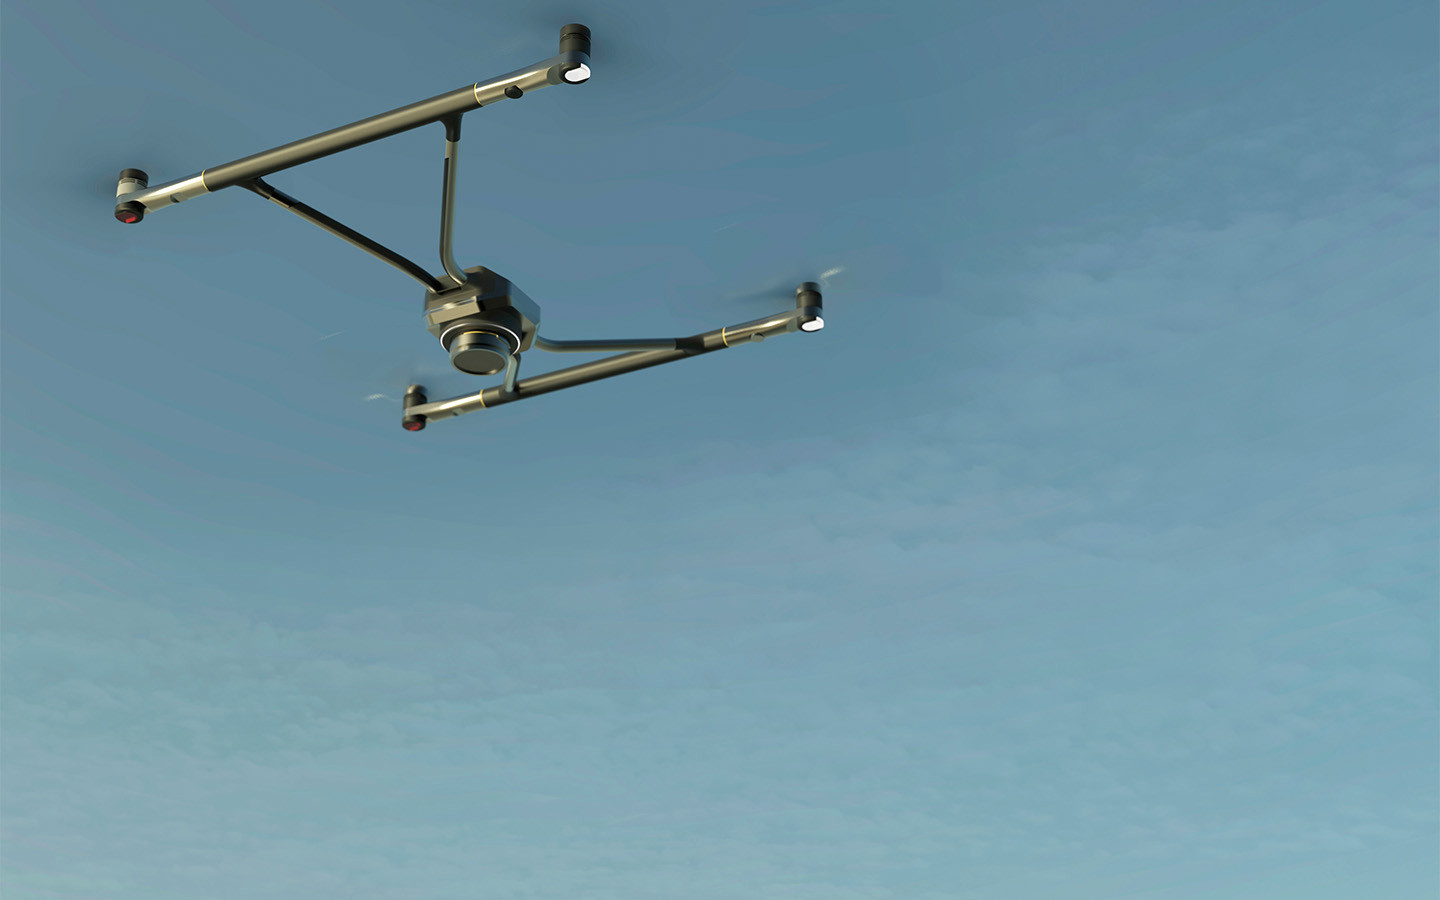 KLEA - a drone for farmers